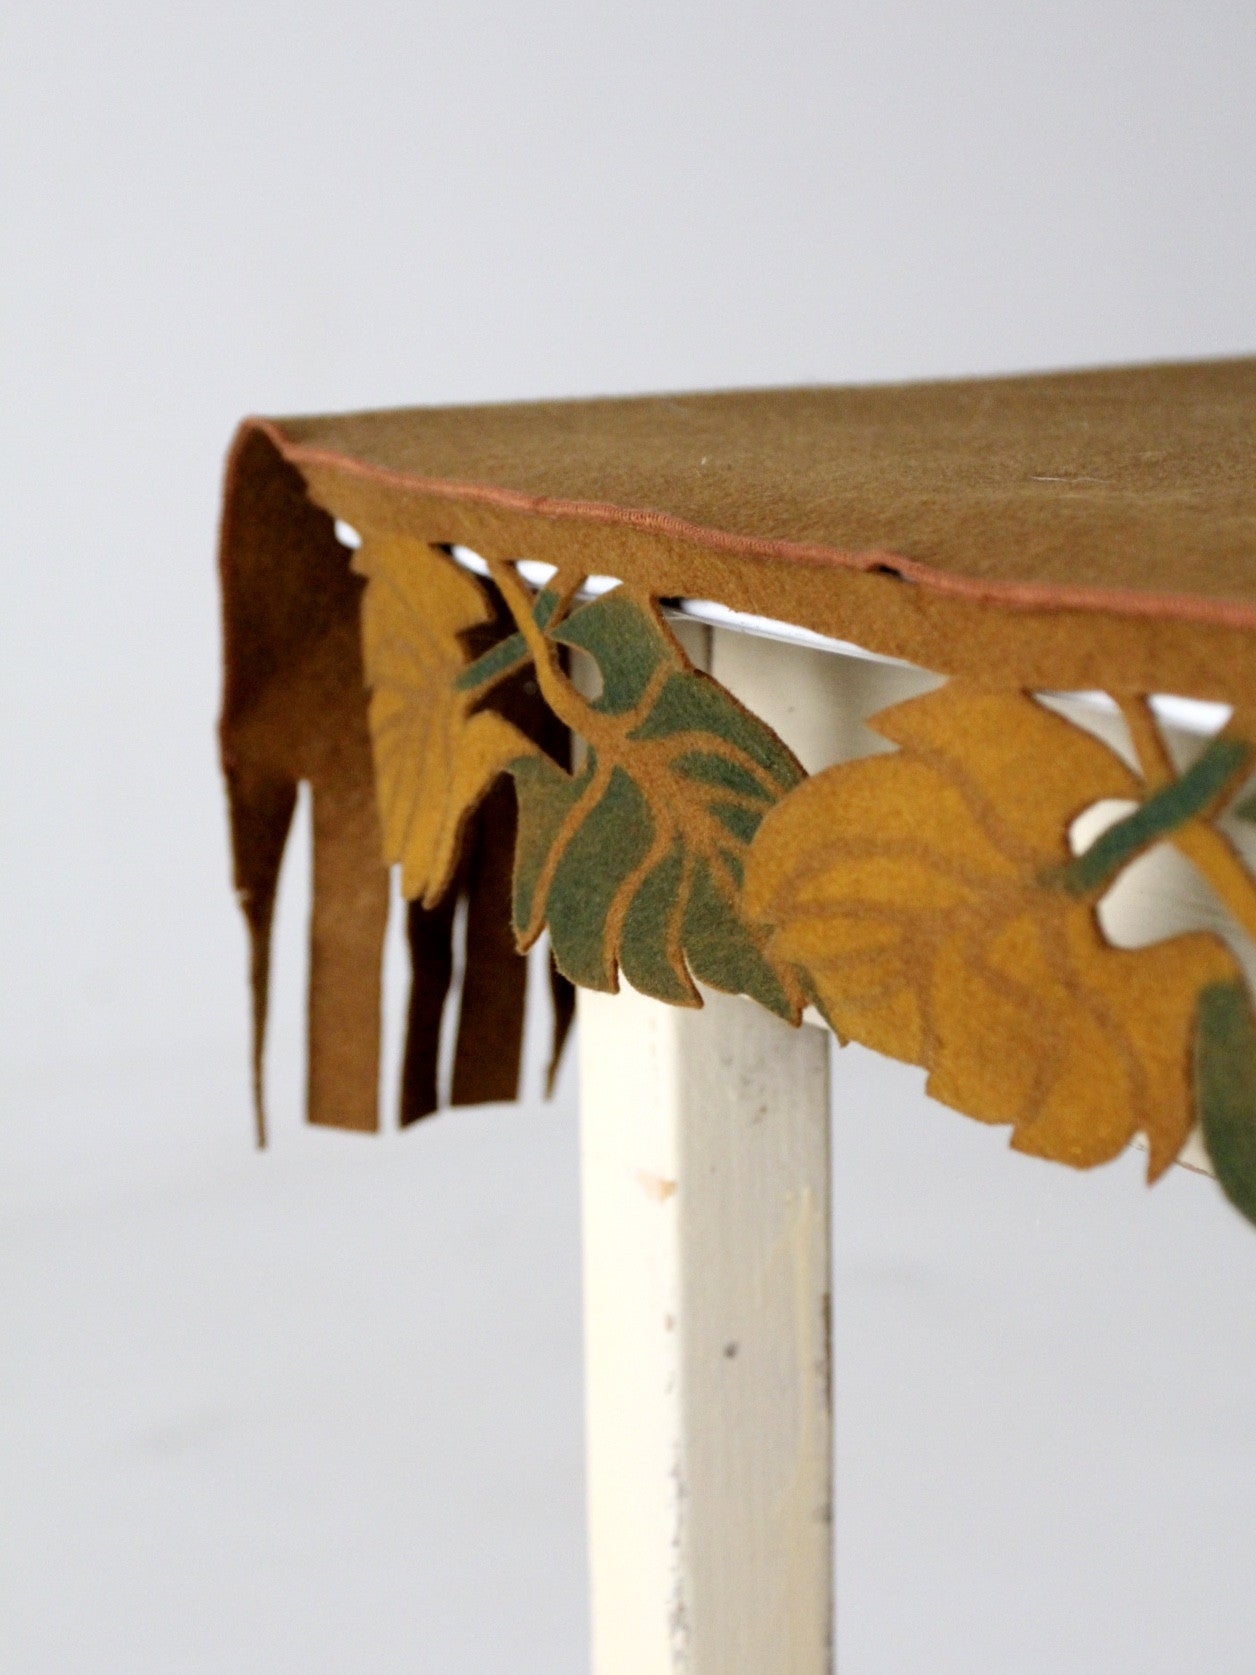 vintage felt table runner with autumn leaf design